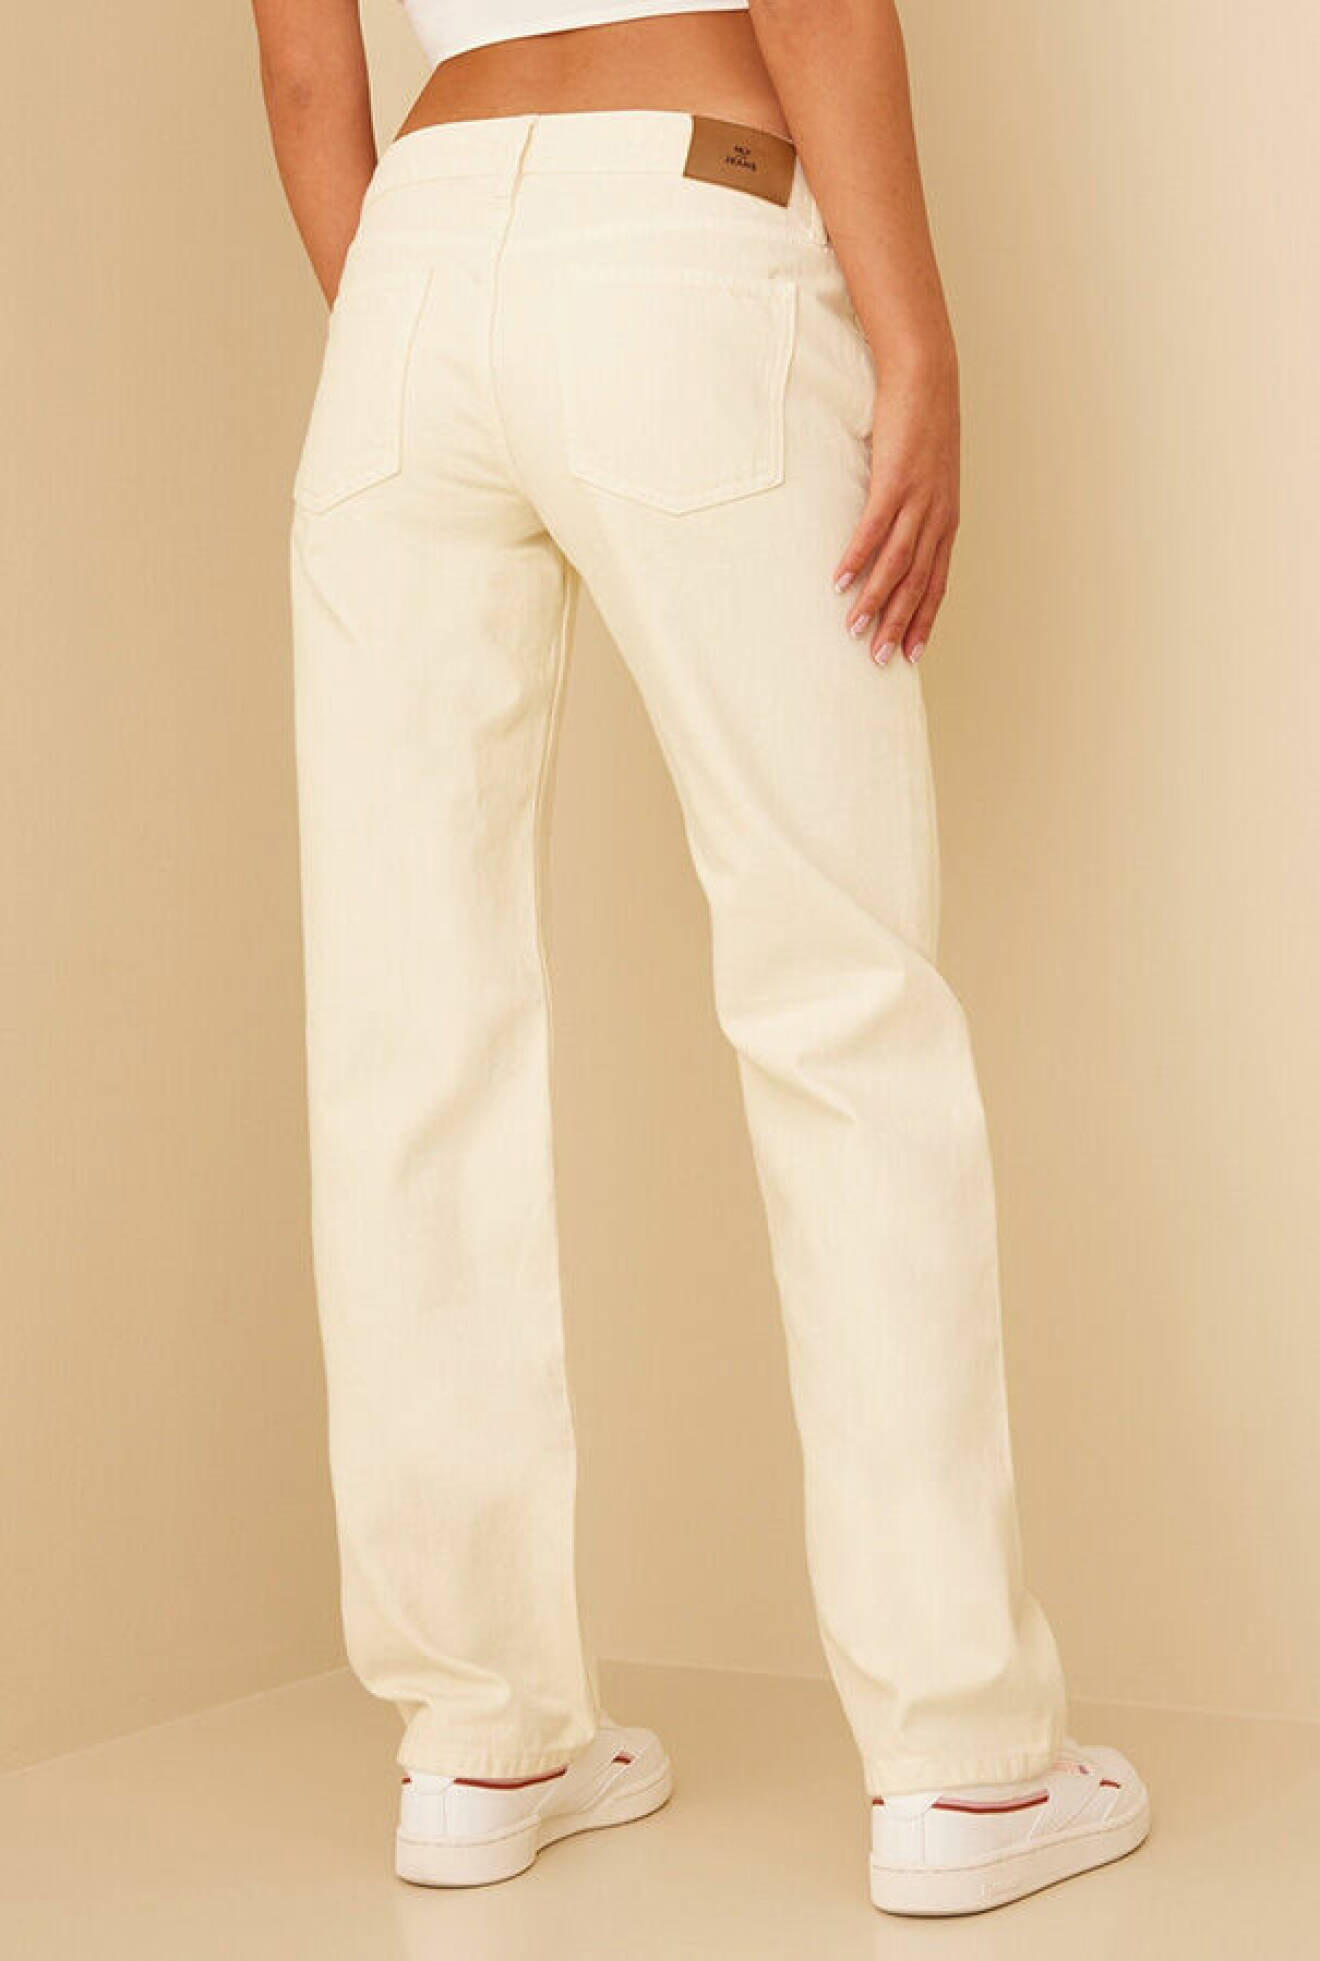 Vita låga jeans, NLY Trend